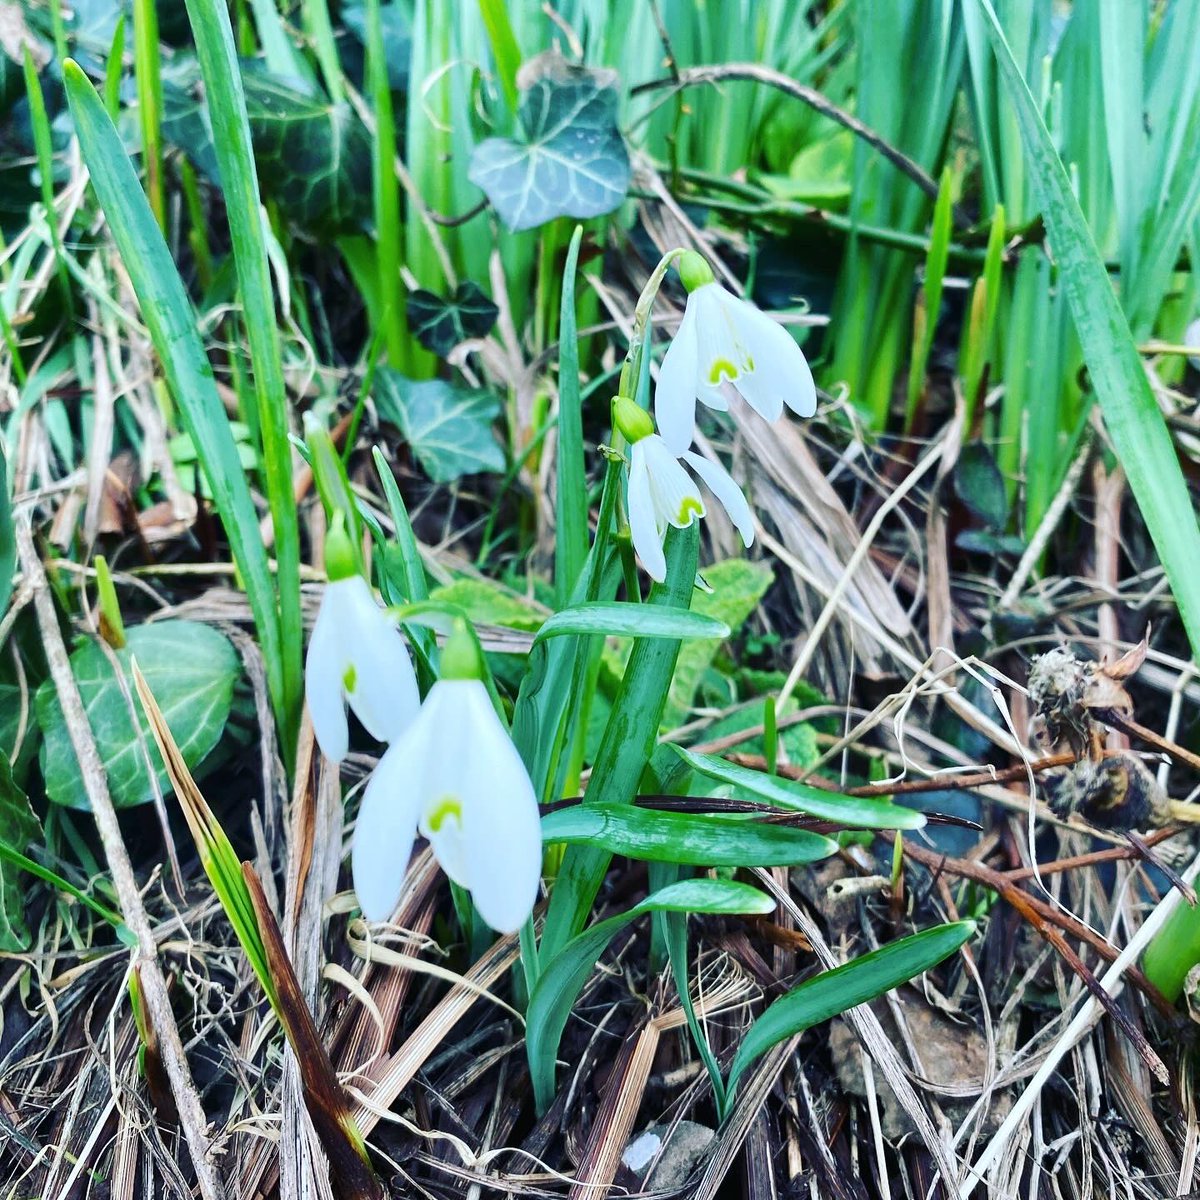 Spring has sprung but it doesn’t feel very springy 🥶🌊💨
.
.
#daffodils #snowdrops #spring #springflowers #islandlife #lifeonrathlin #rathlinisland